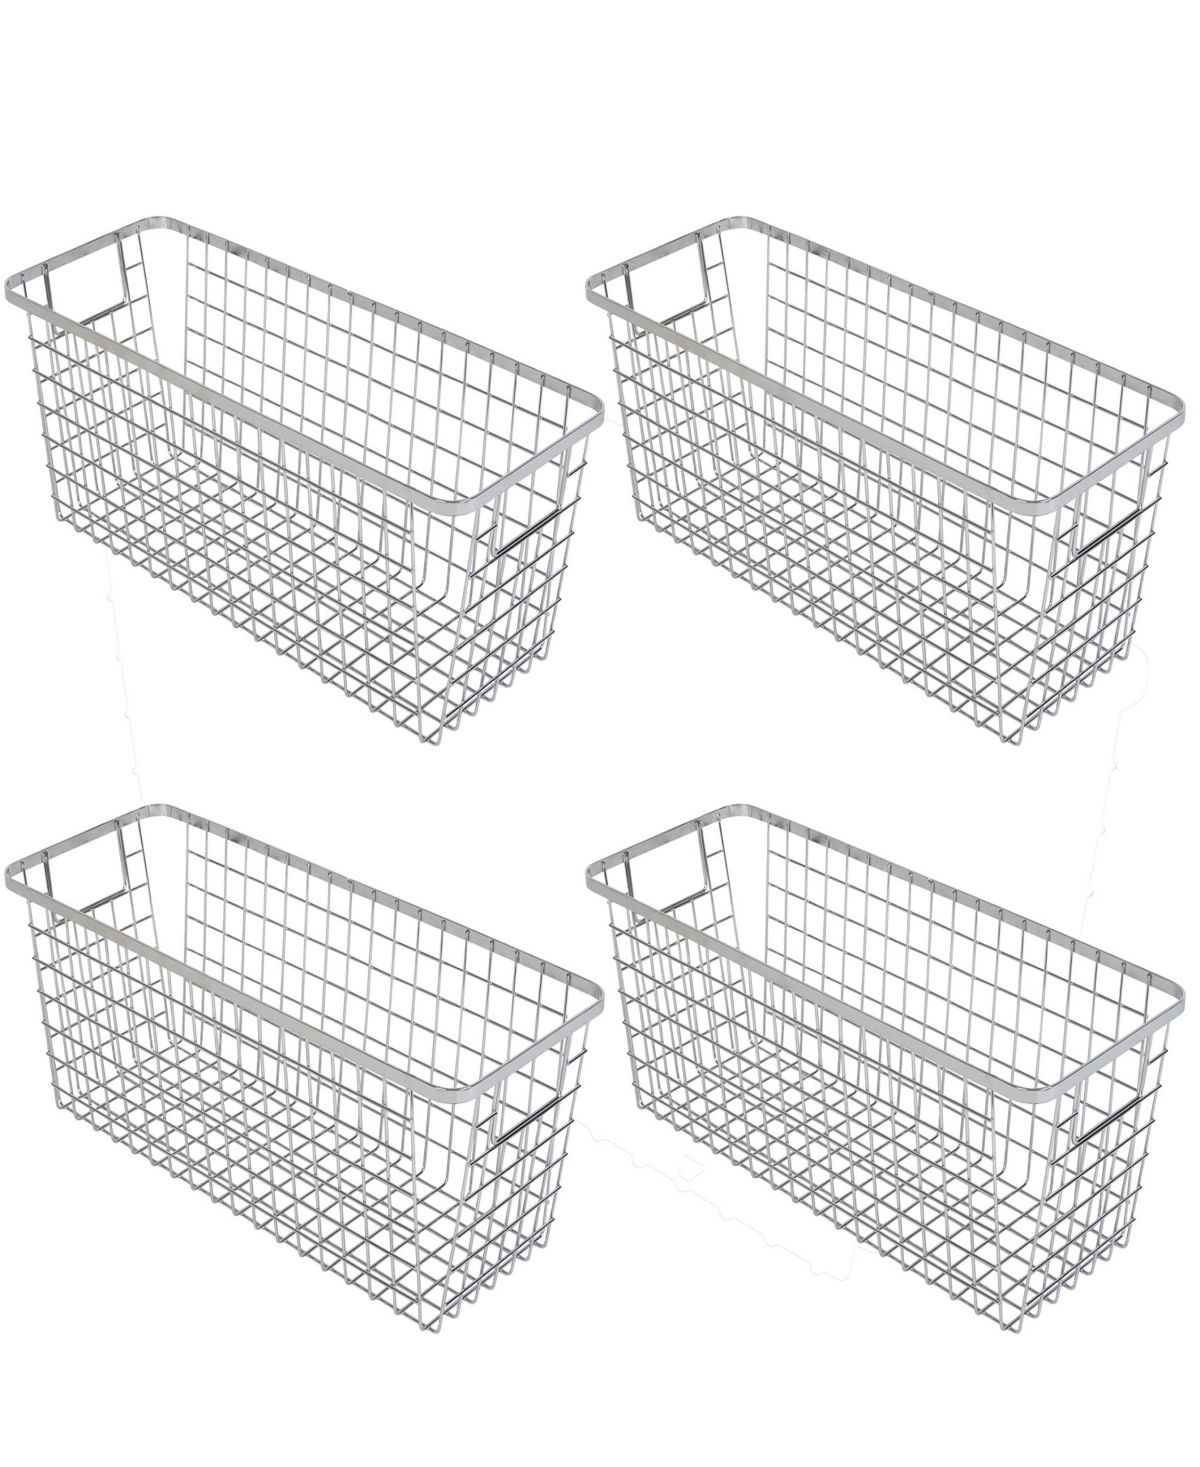 Smart Design Nestable 6" X 16" X 6" Basket Organizer With Handles, Set Of 4 In Chrome